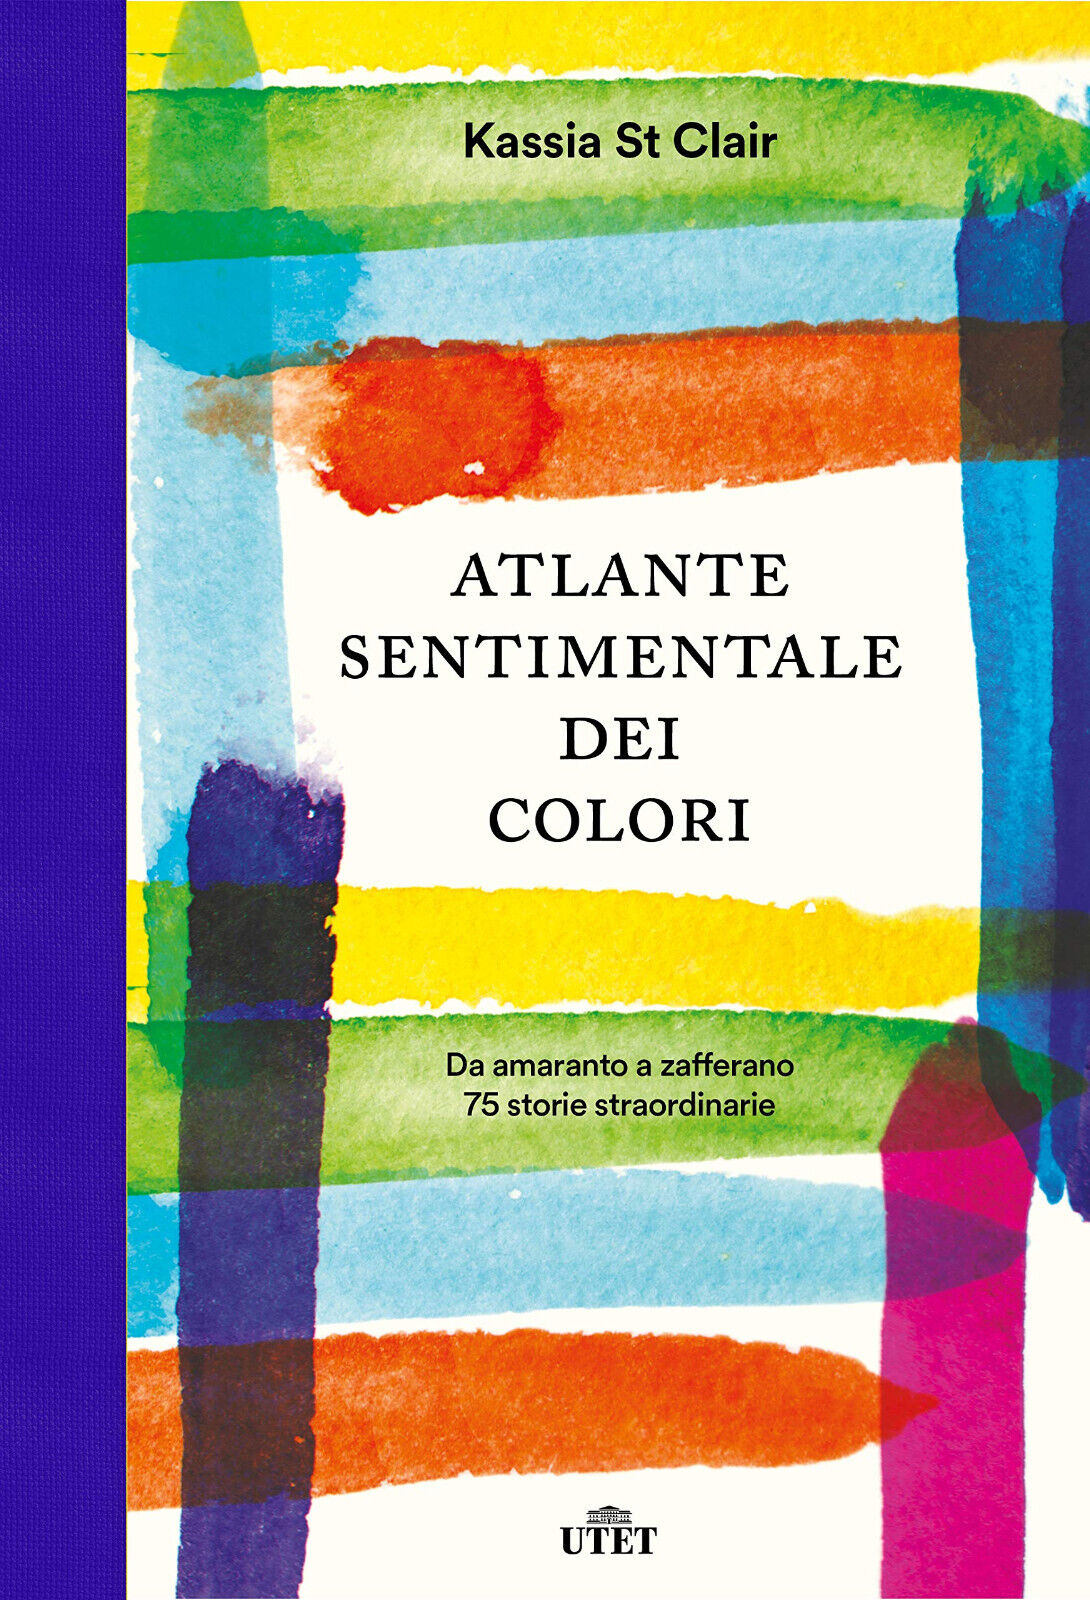 Atlante sentimentale dei colori -  Kassia St Clair - UTET, 2018